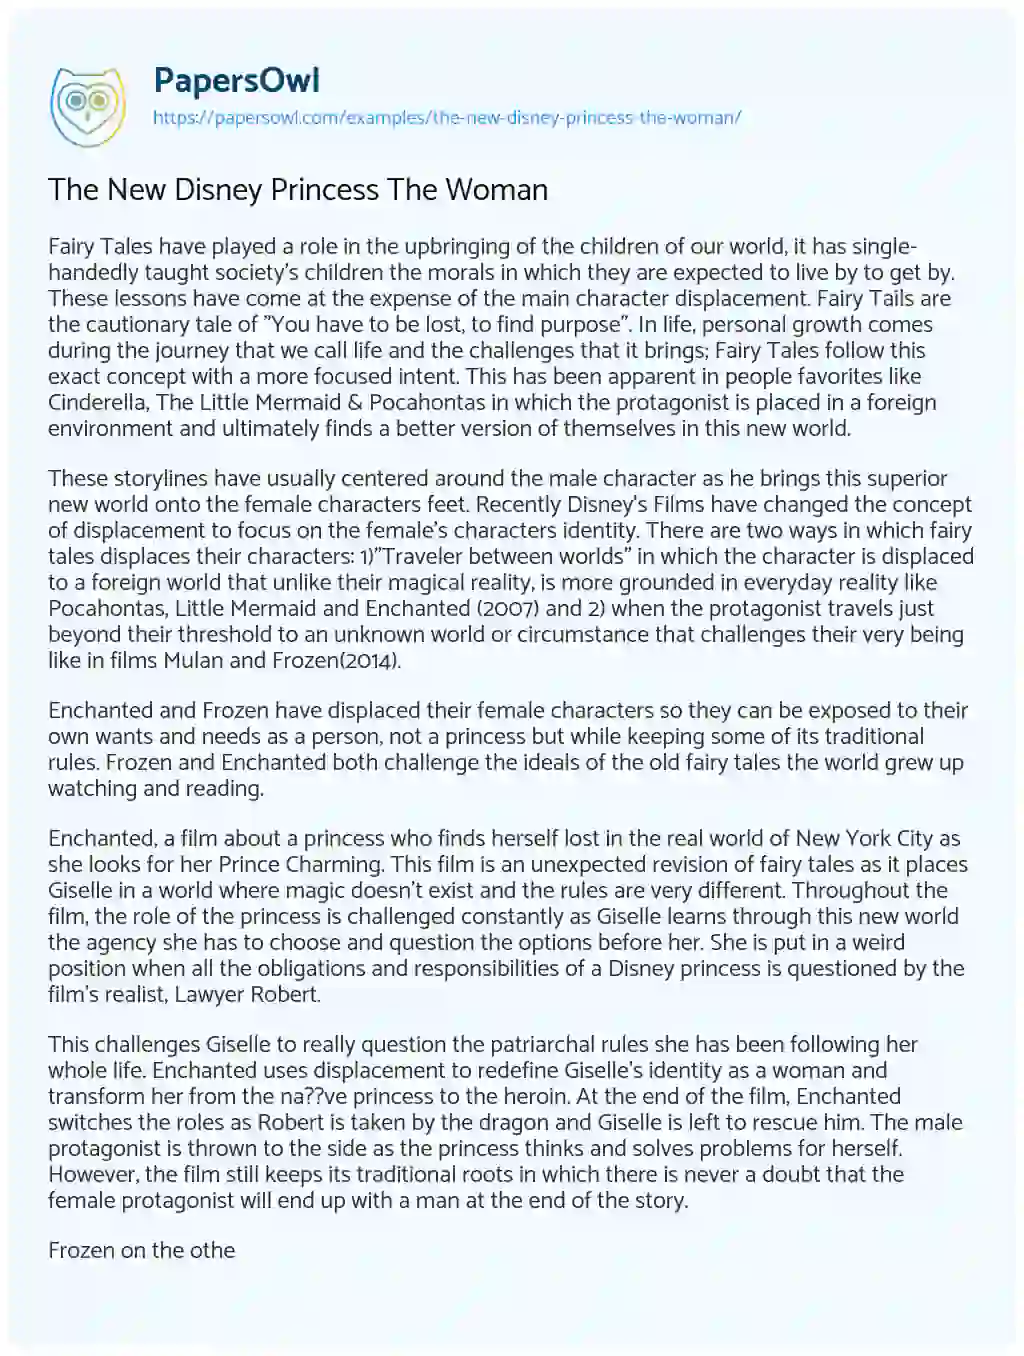 Essay on The New Disney Princess the Woman